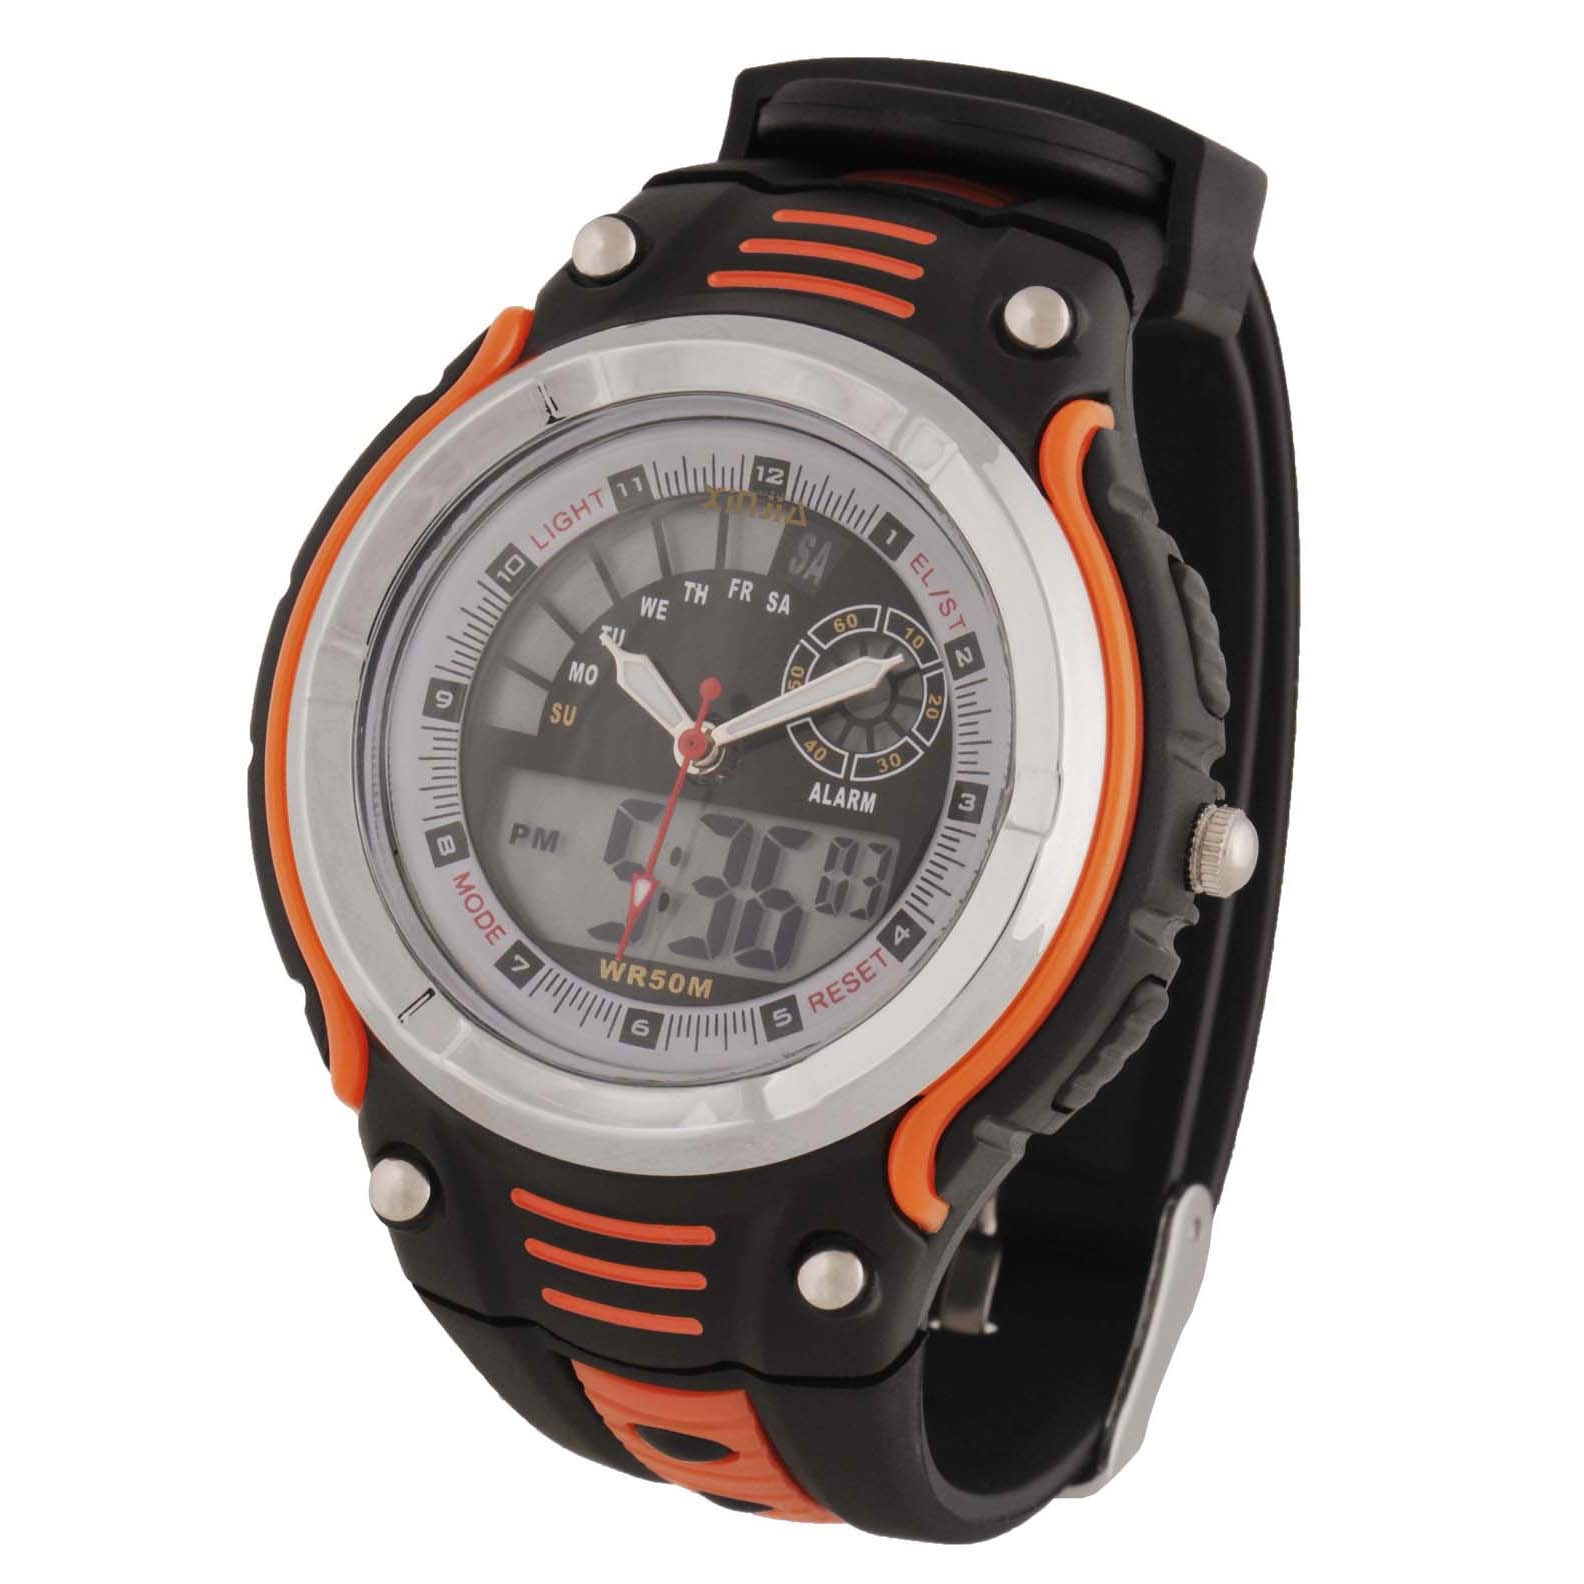 Quartz Analog Digital Water Resistant Wrist Watch